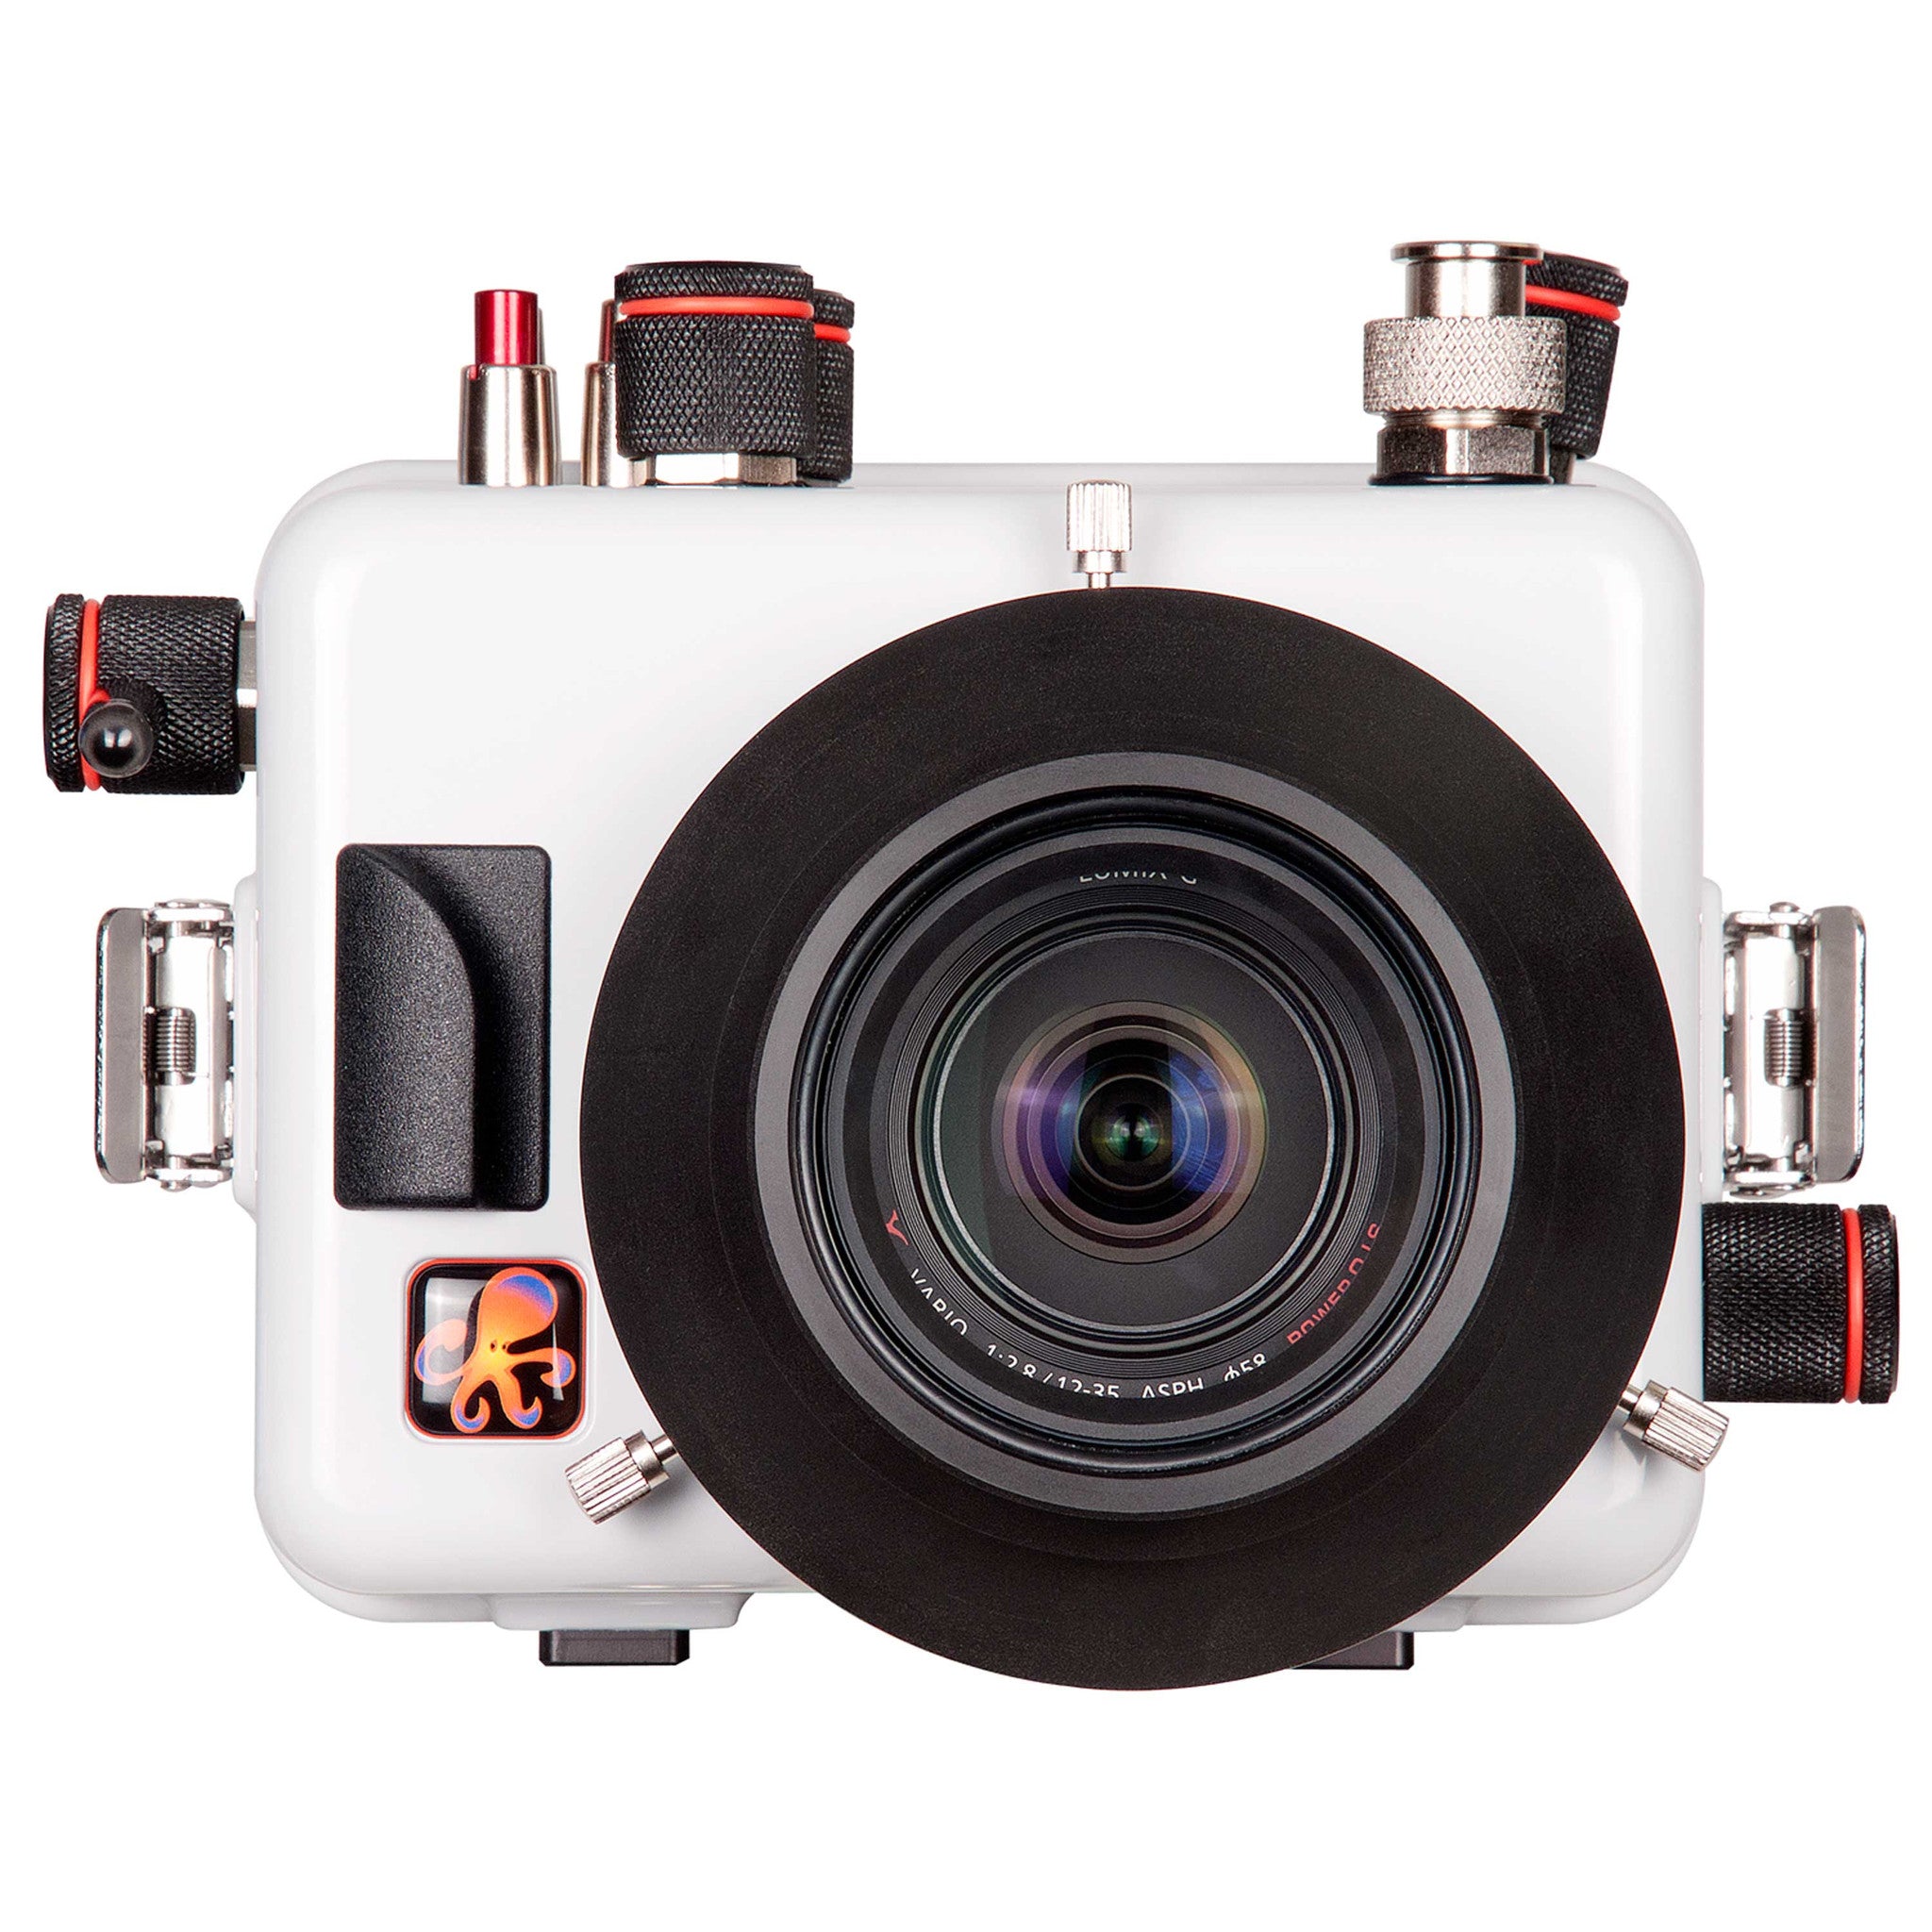 200DLM/B Underwater TTL Housing for Panasonic Lumix G7 Mirrorless Micro Four-Thirds Cameras